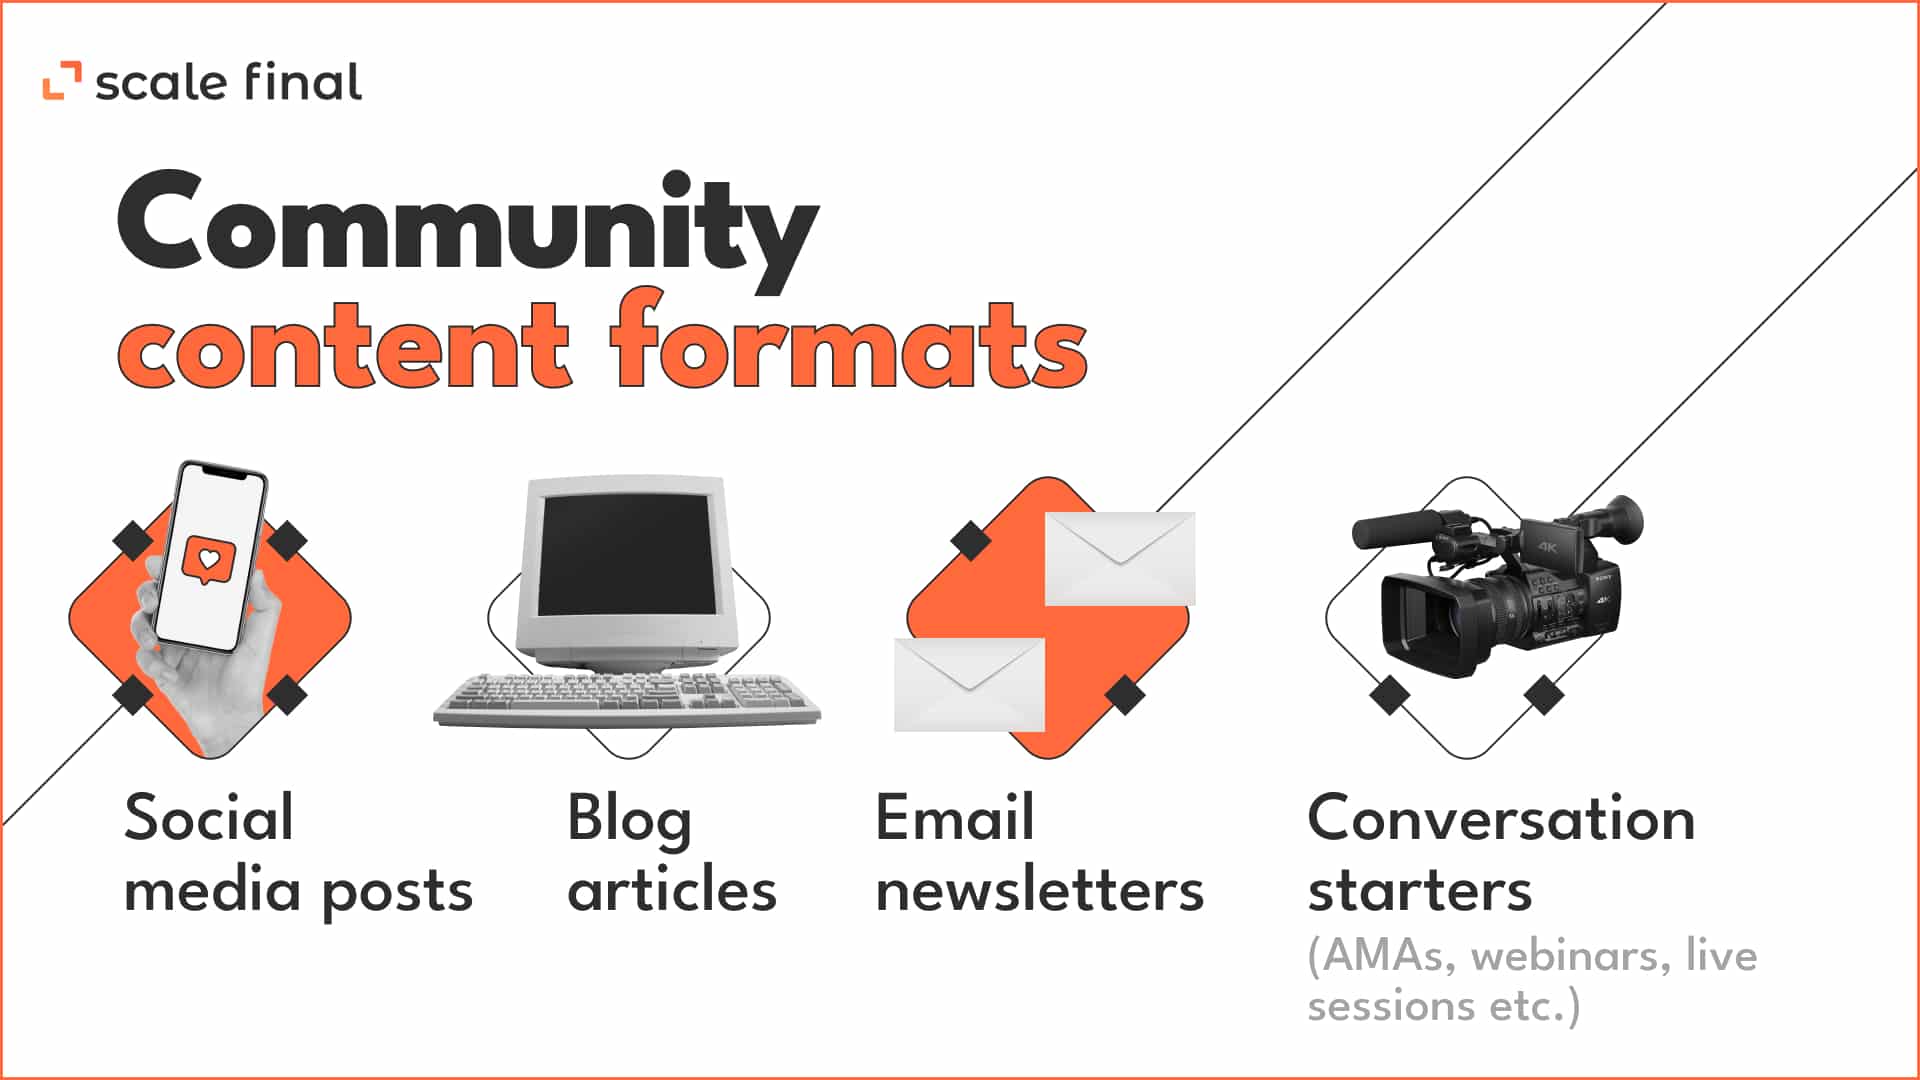 Community content formats: Social media postsBlog articlesEmail newslettersConversation starters (AMAs, webinars, live sessions etc.)